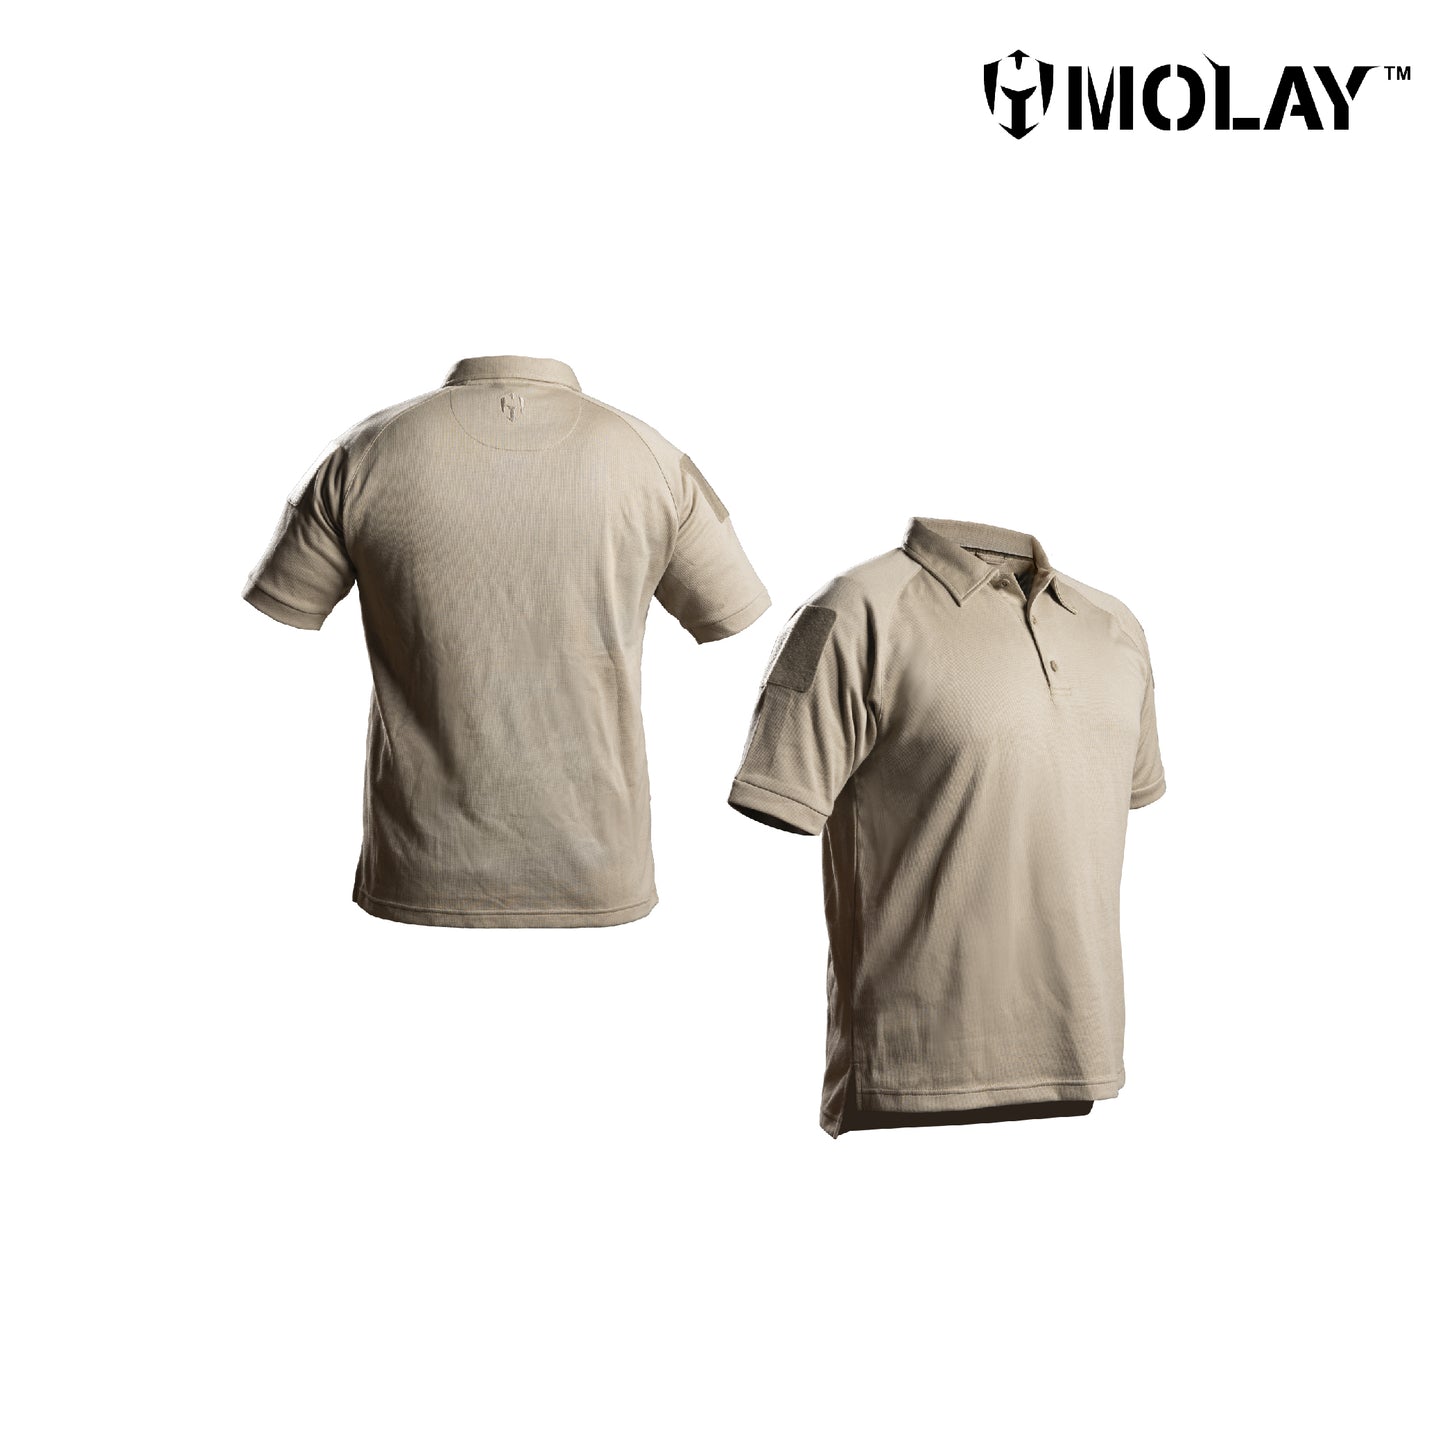 Molay® Advanced Striker Performance Shirt